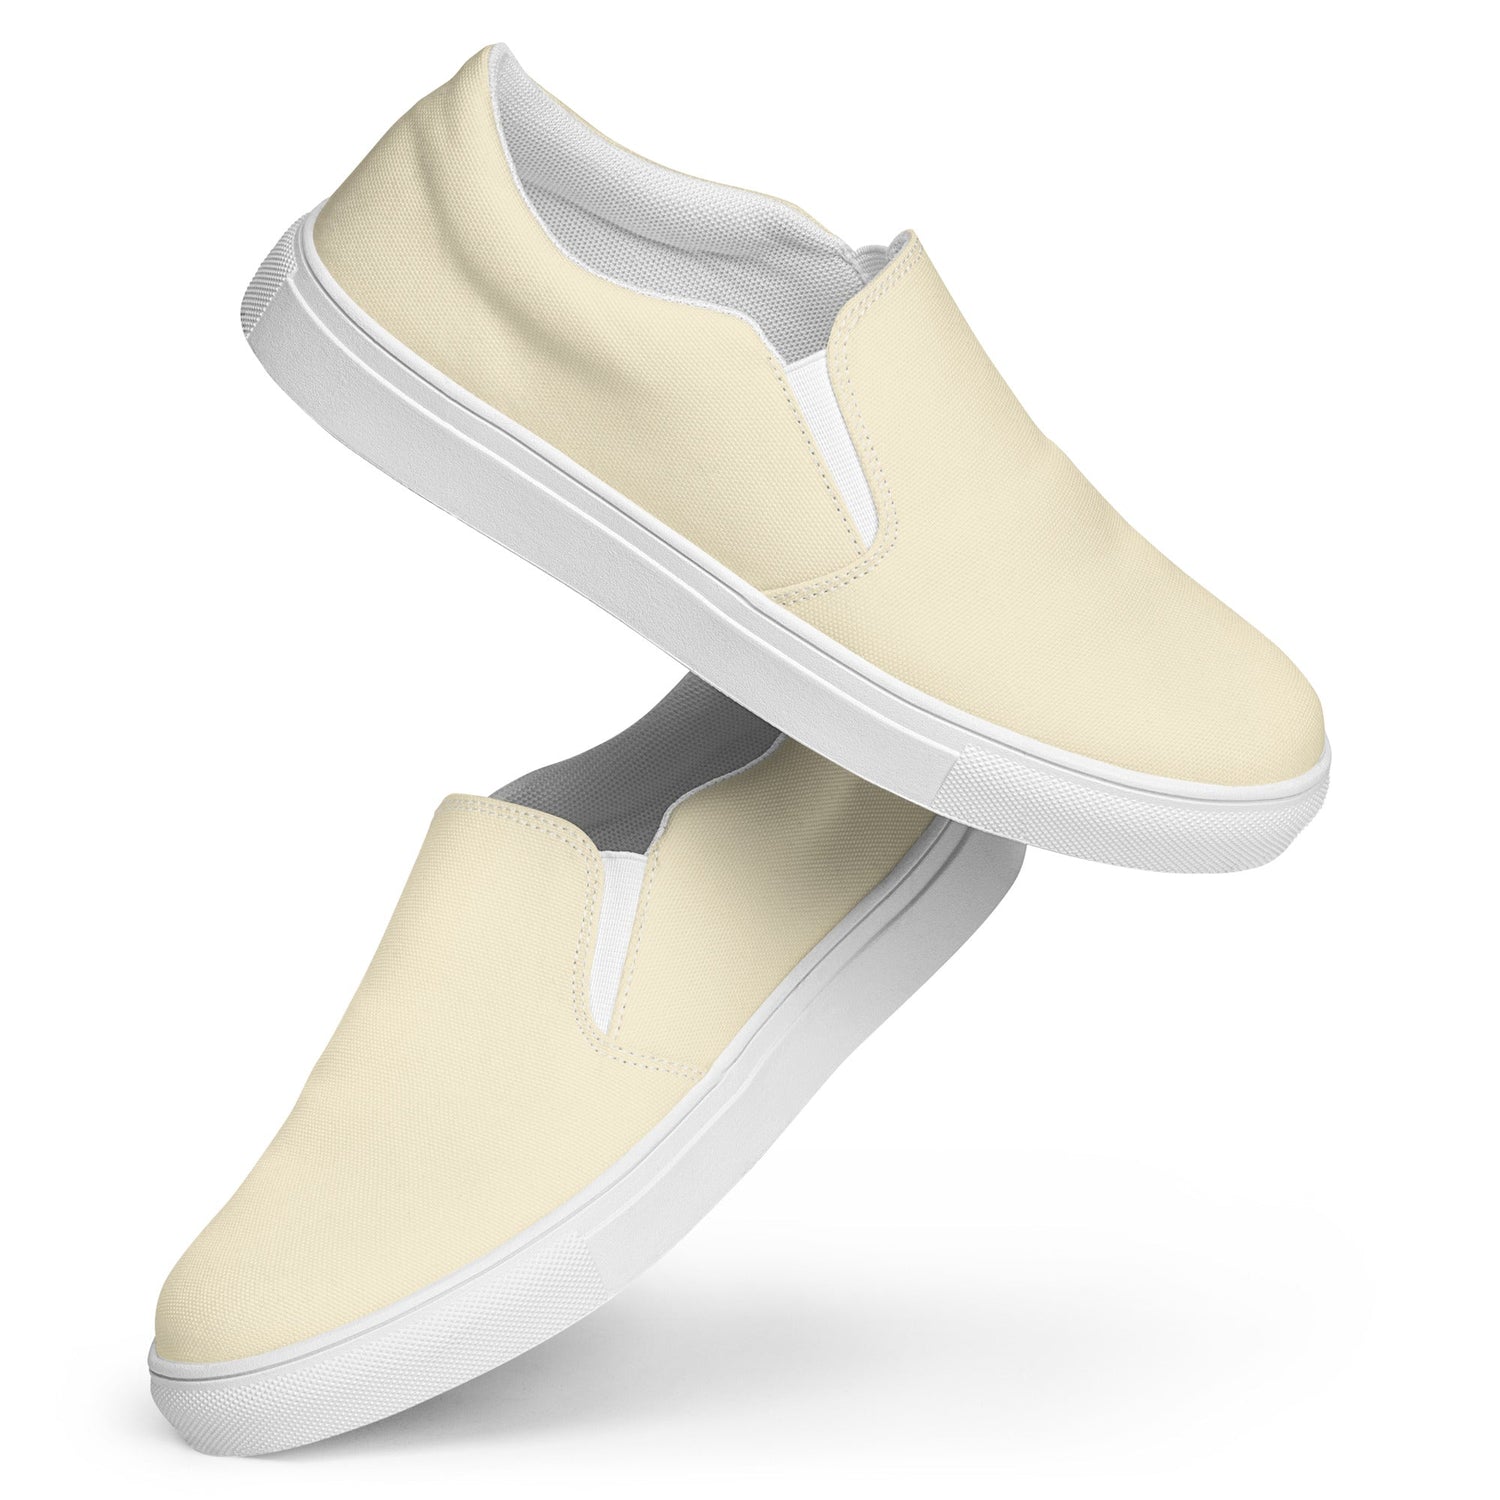 klasneakers Men’s slip-on canvas shoes - Cream